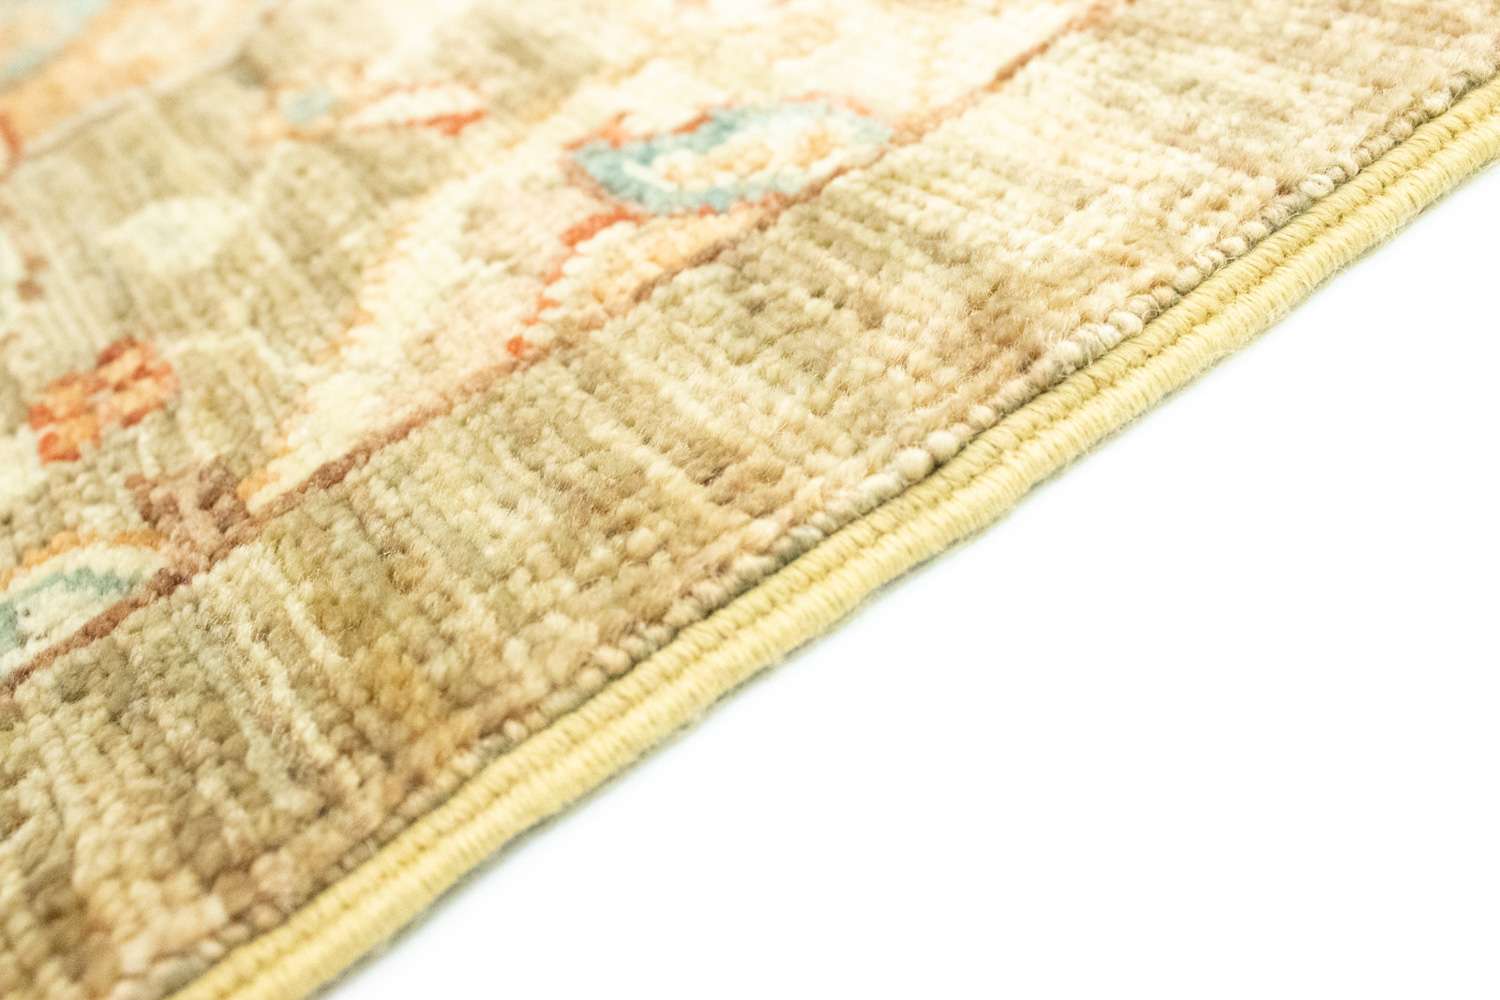 Runner Zieglerův koberec - 292 x 82 cm - vícebarevné